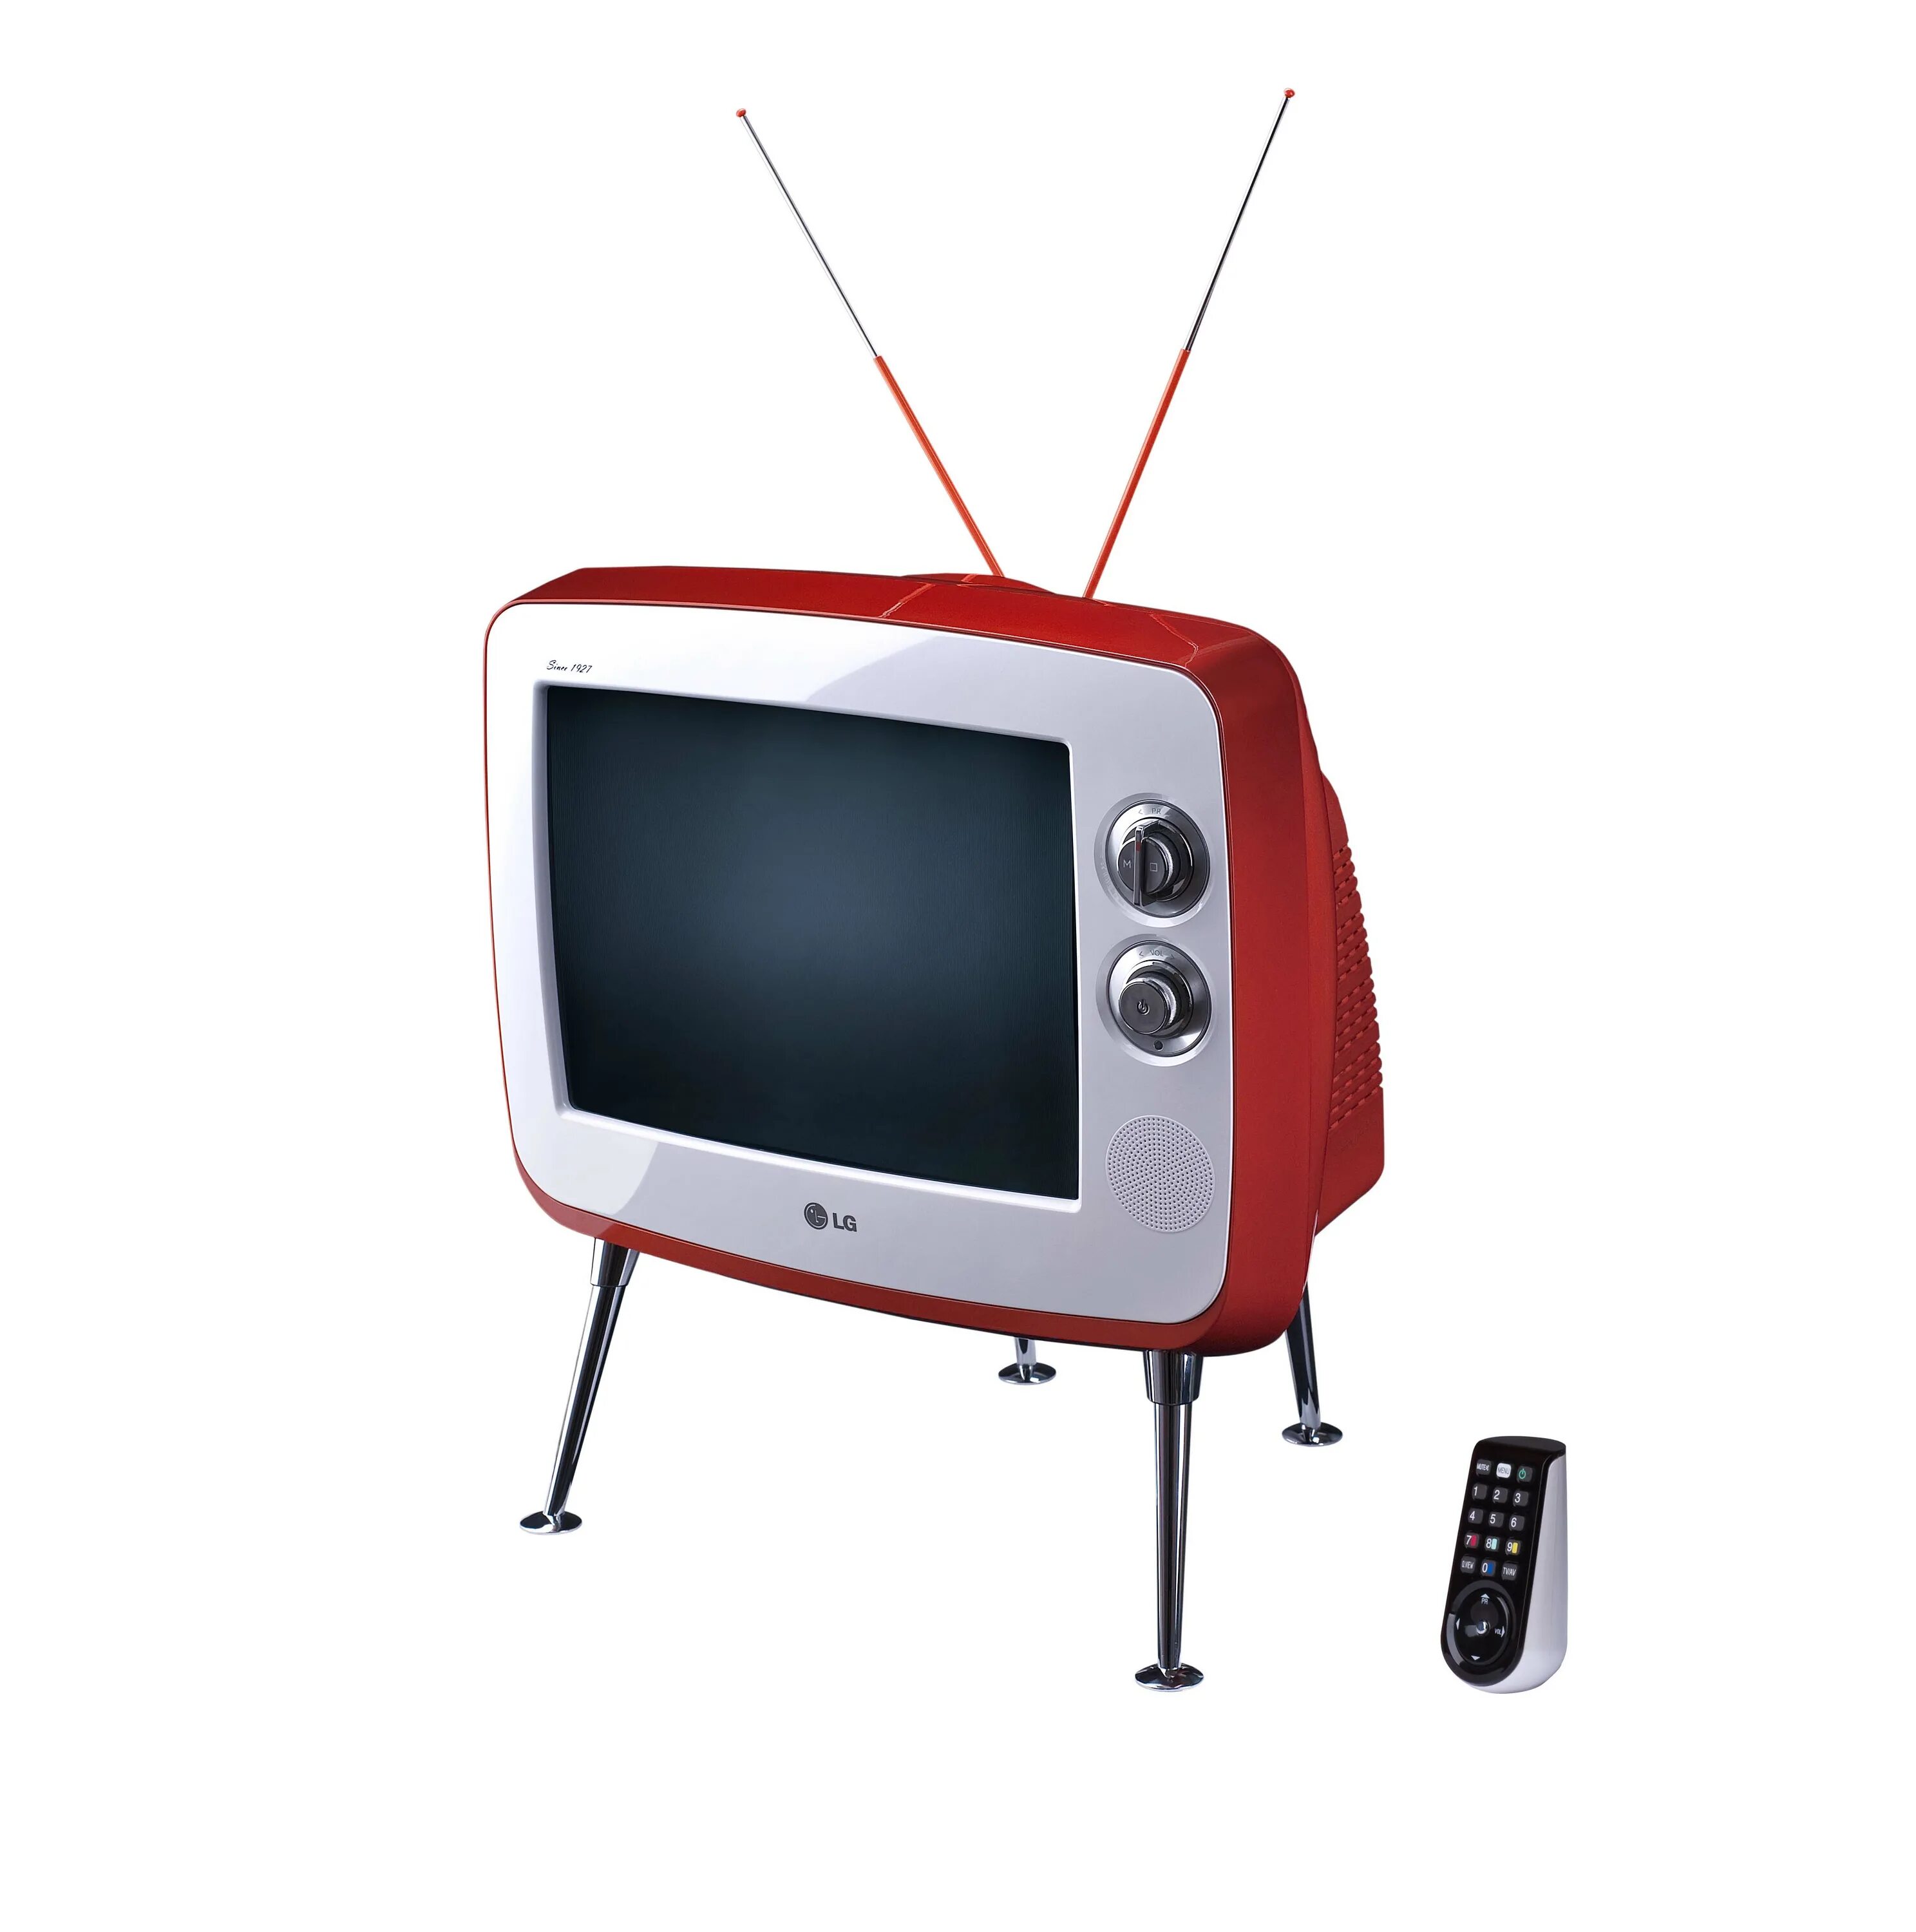 Куплю переносной телевизор. Телевизор LG Retro Classic. LG Retro TV. Телевизор LG Classic TV. Маленький телевизор ретро.